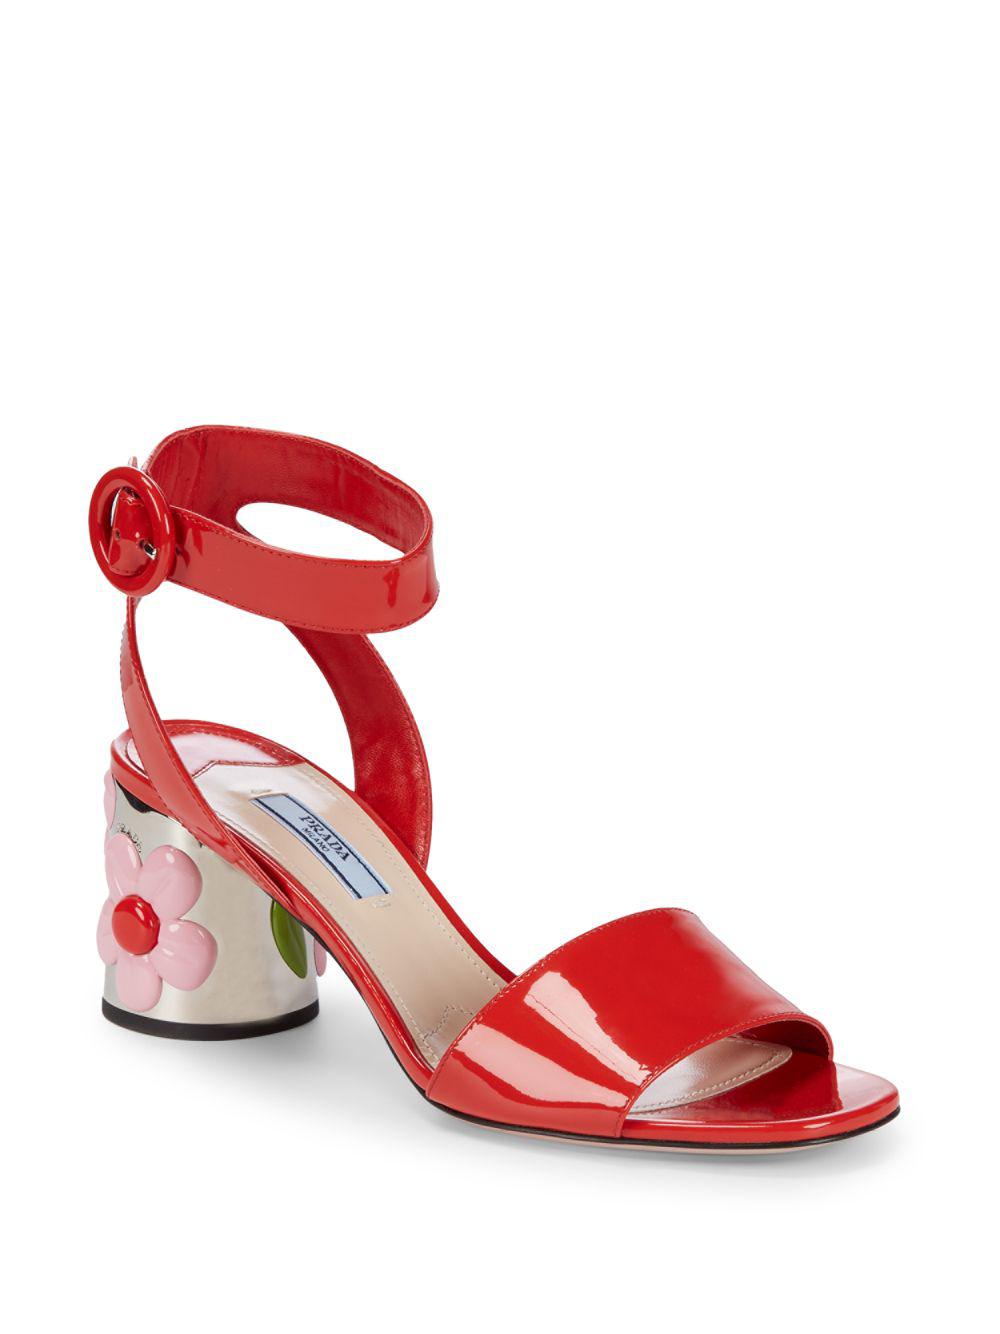 Prada Flower Heel Patent Leather Sandals in Red - Lyst